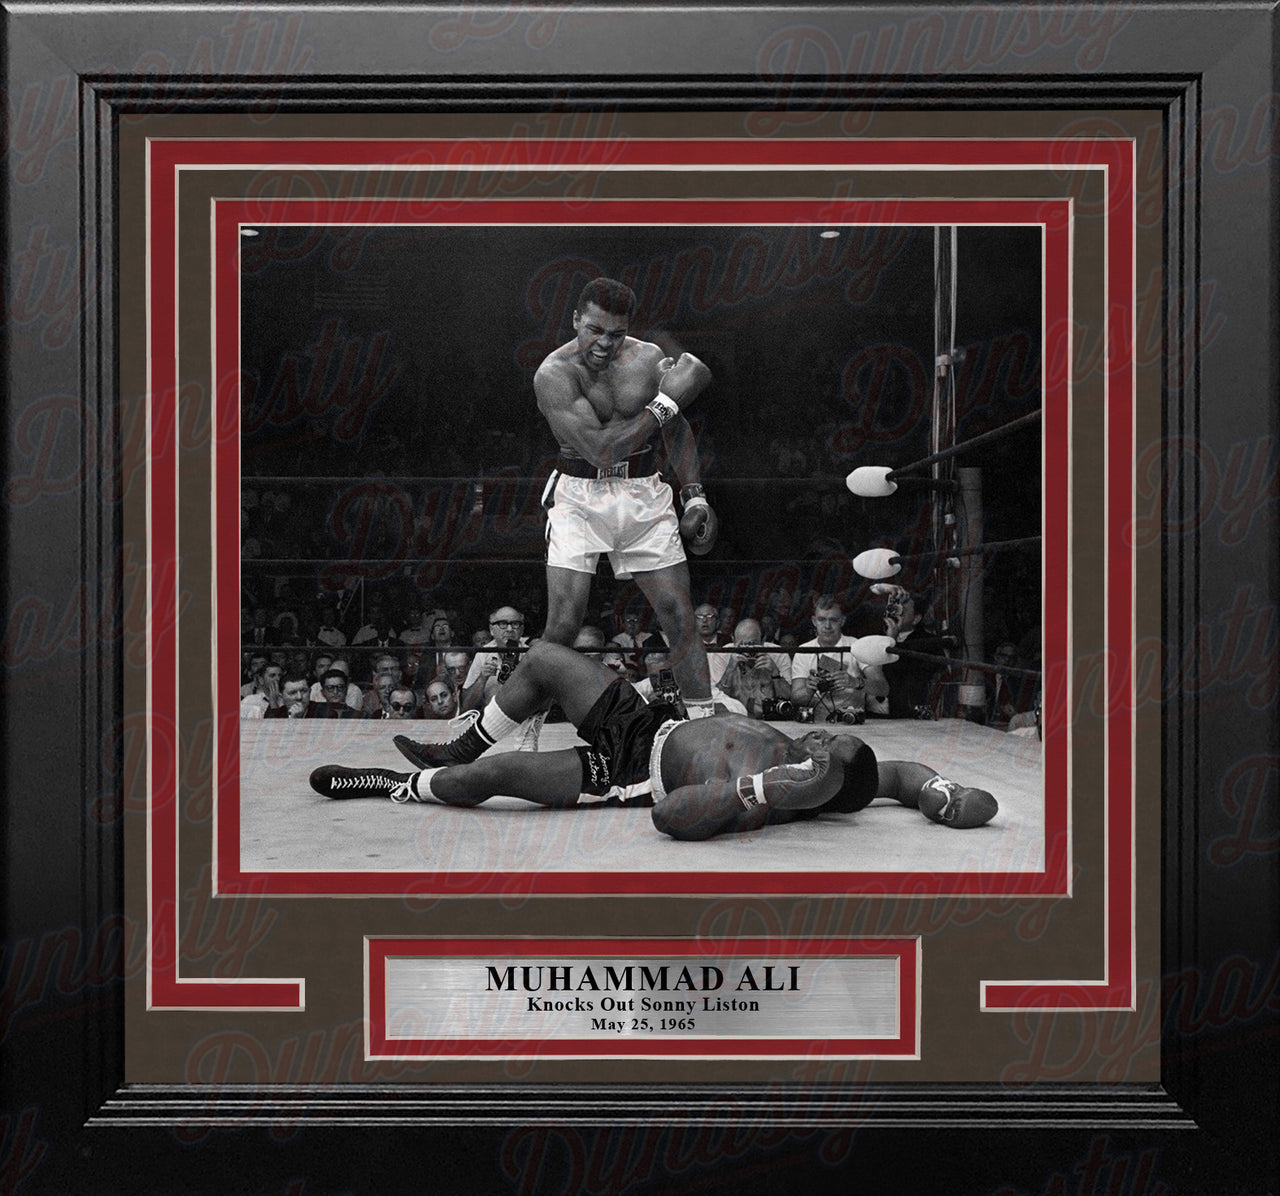 Muhammad Ali Knocks Out Sonny Liston Framed Boxing Photo - Dynasty Sports & Framing 